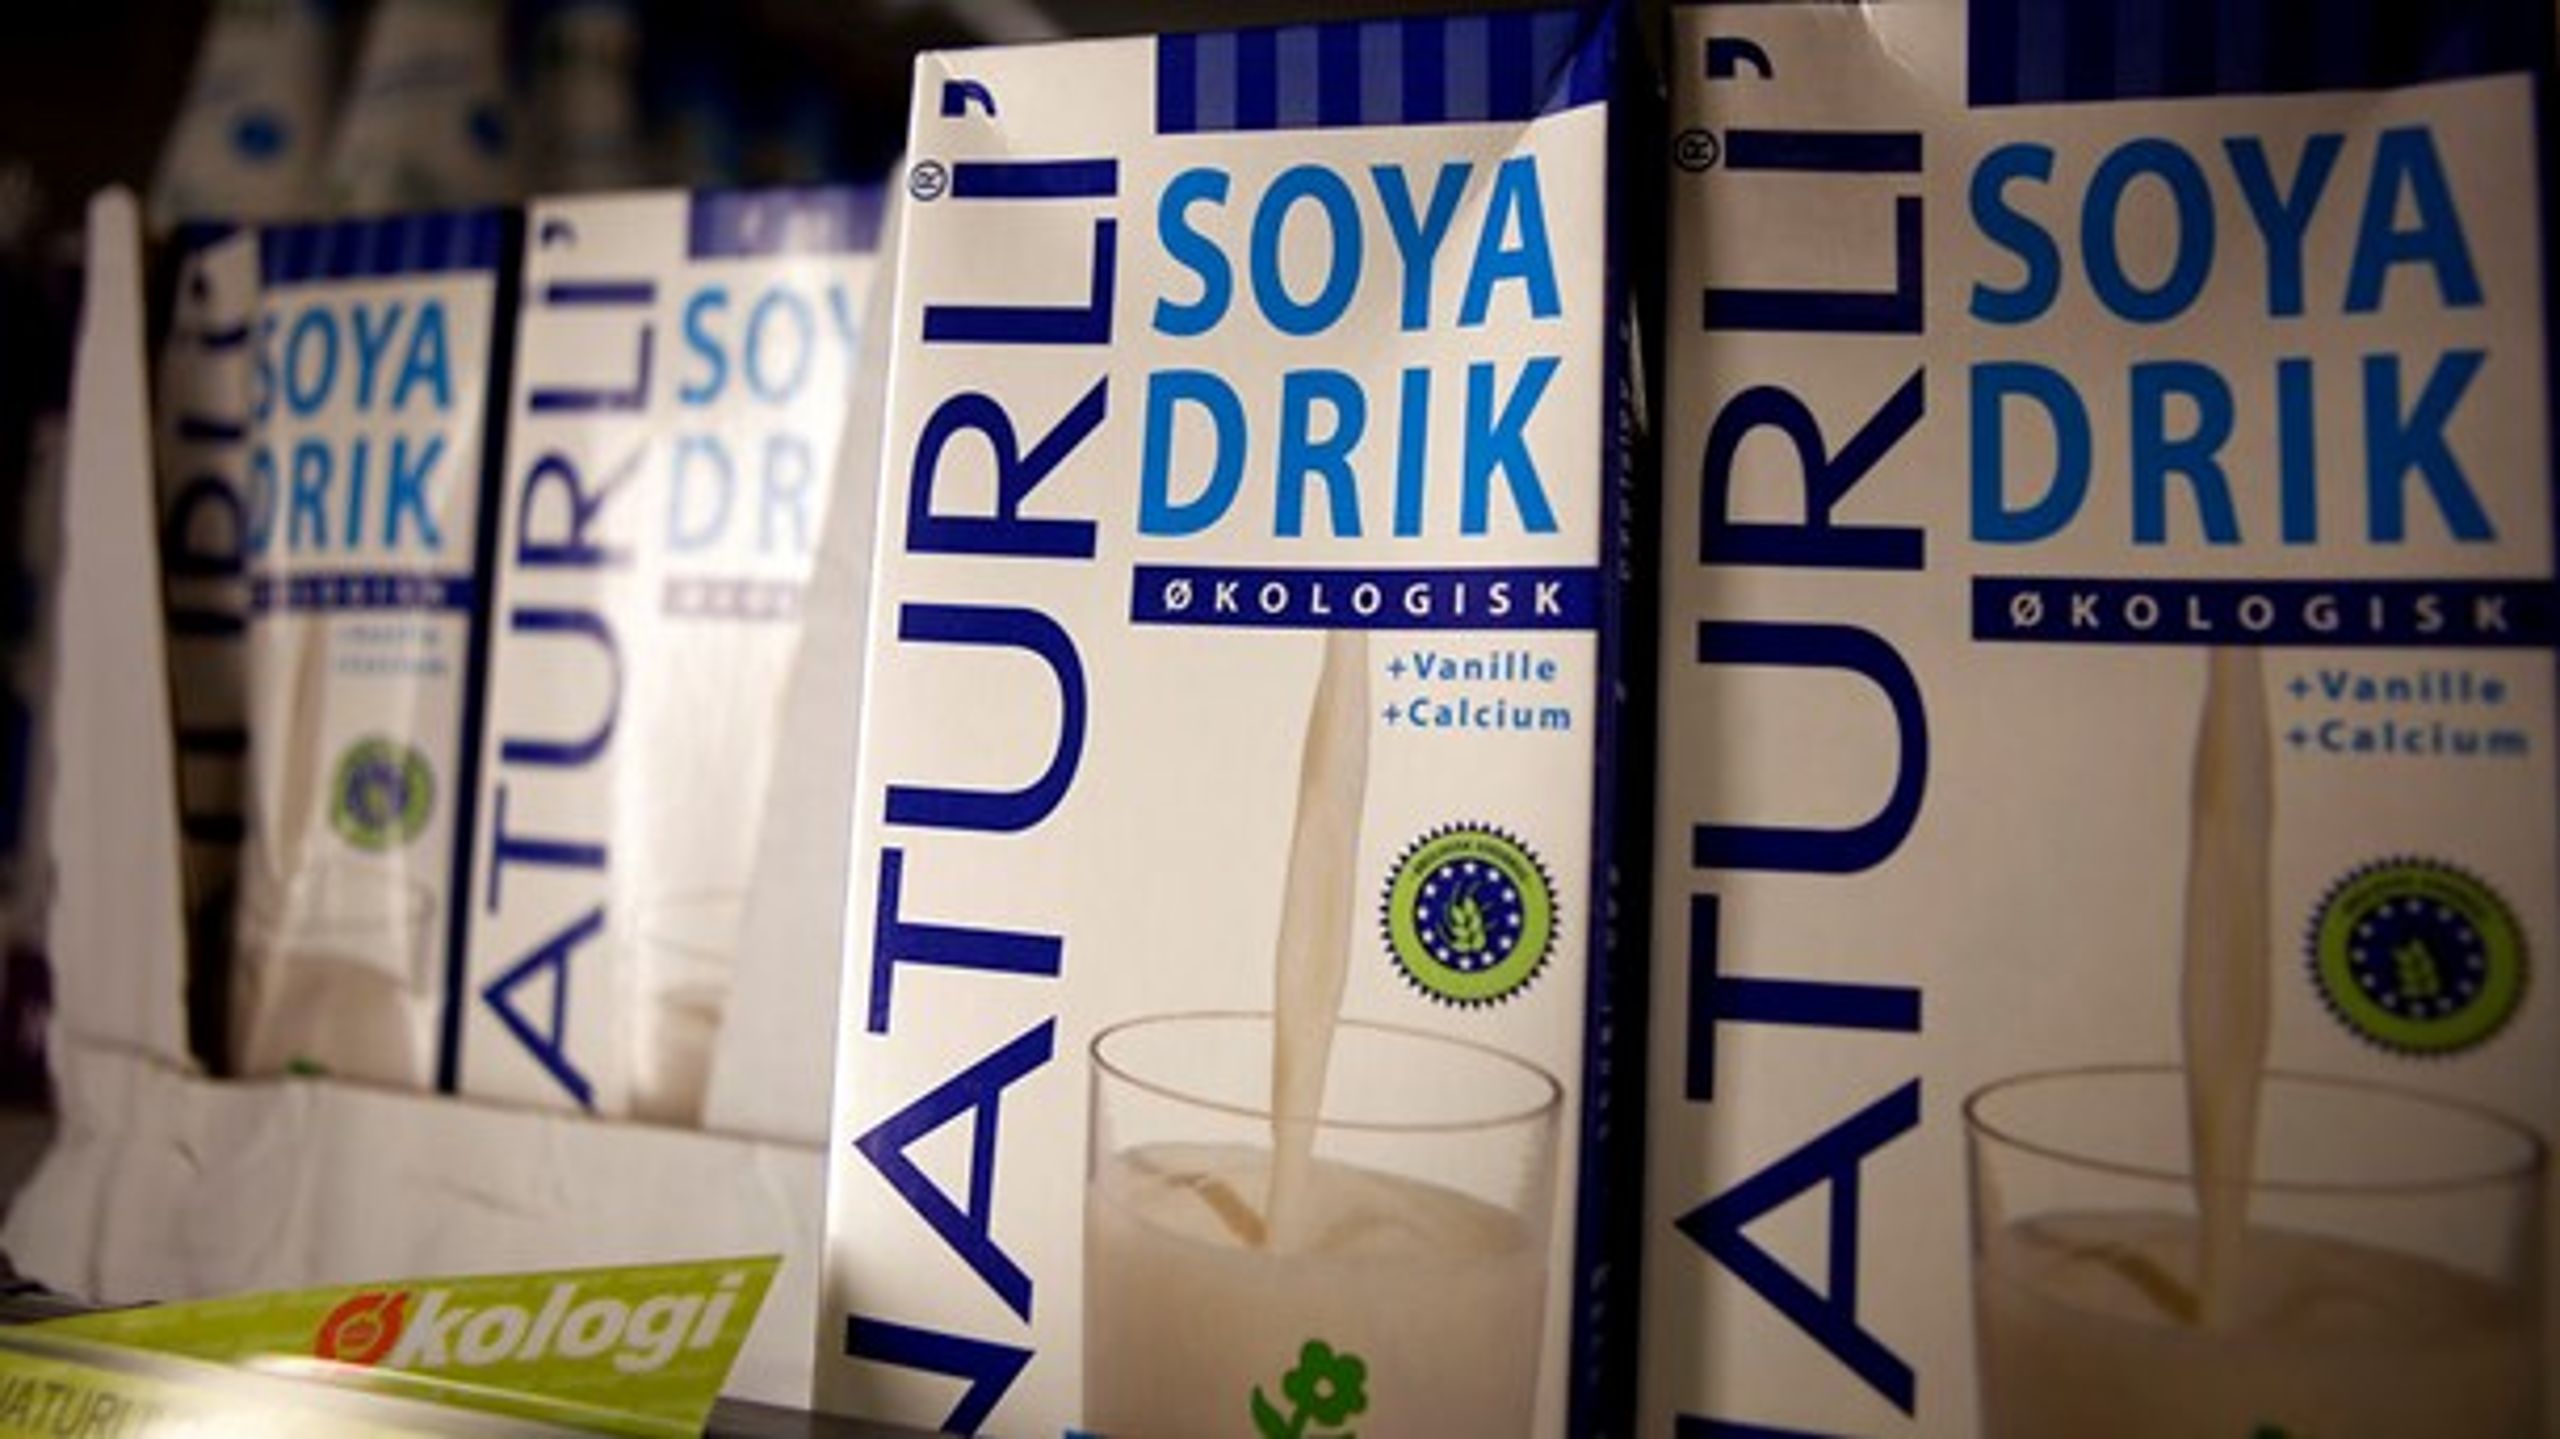 Virksomheden Naturli' må også fremadrettet kalde sine produkter for "drik", men&nbsp;altså ikke eksempelvis soyamælk, afgør EU-domstolen i ny dom.